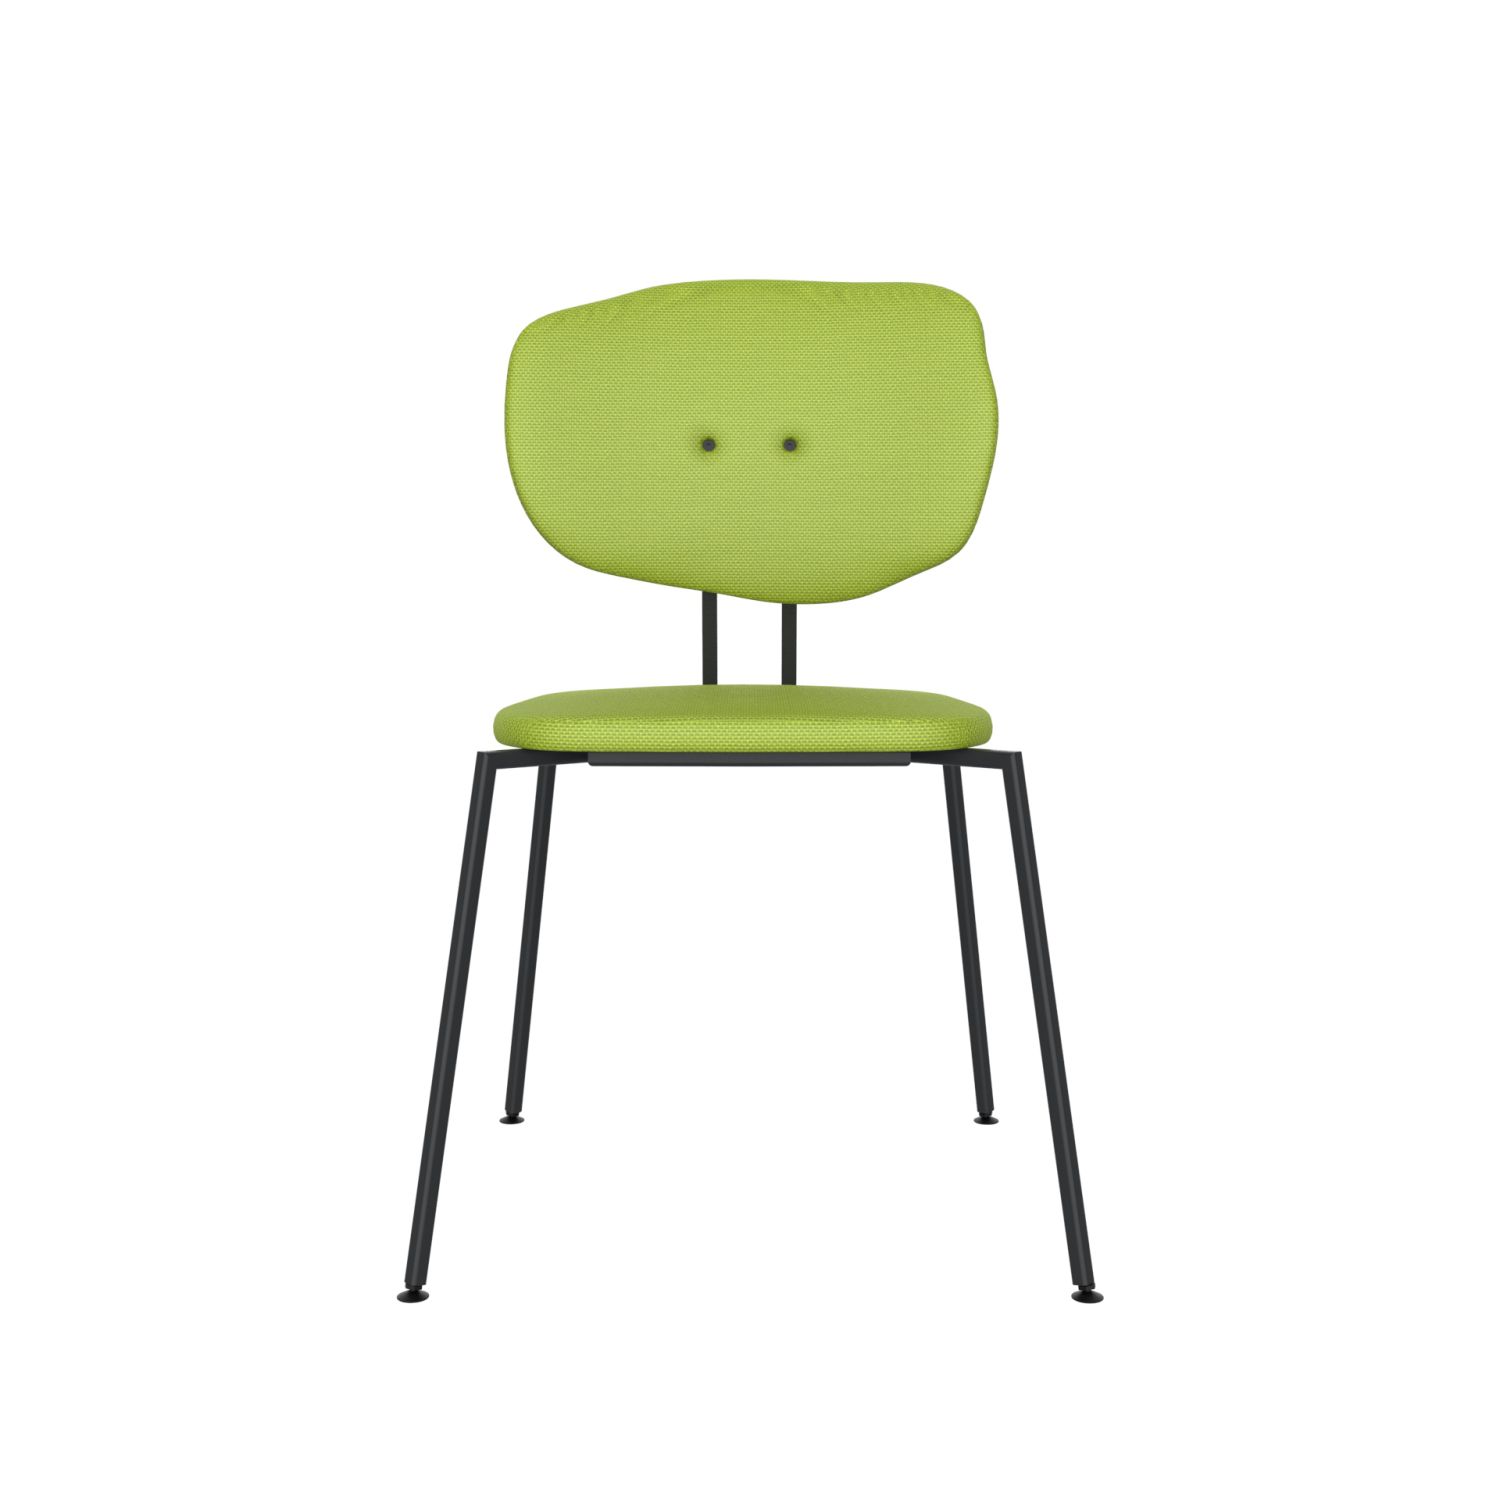 lensvelt maarten baas chair 141 stackable without armrests backrest f fairway green 020 black ral9005 hard leg ends